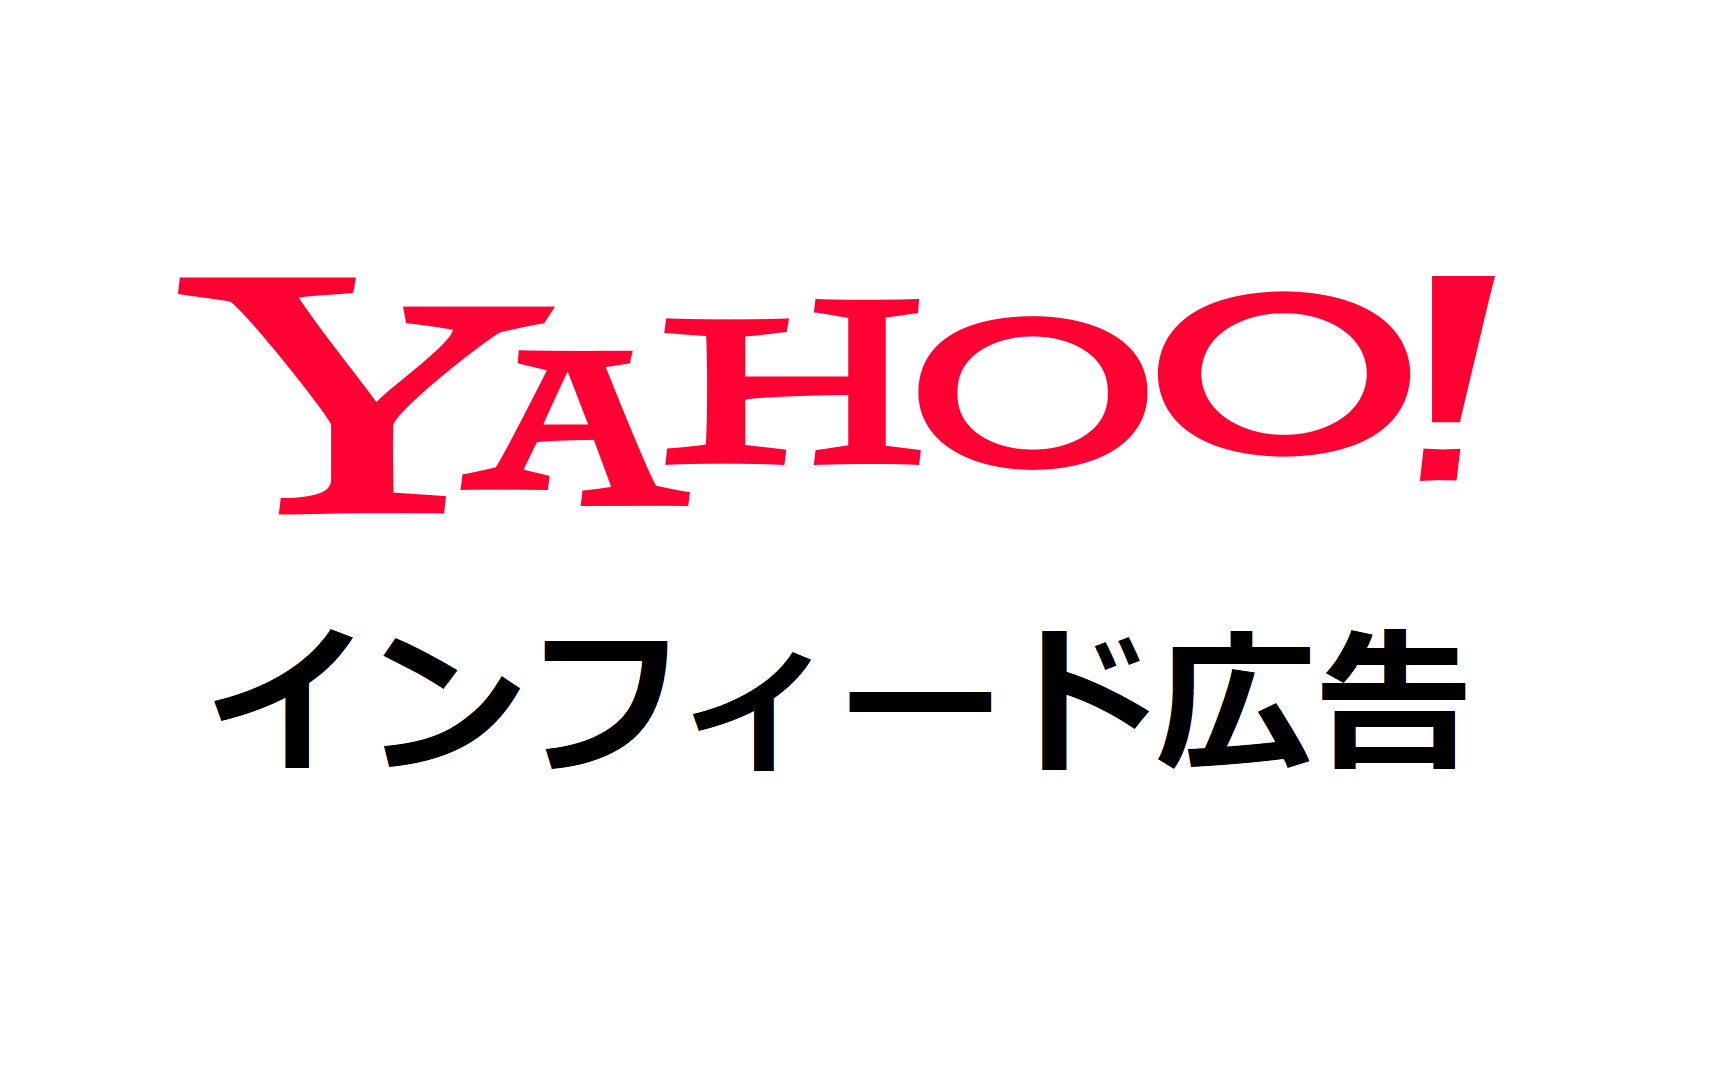 Yahoo インフィード広告とは 概要や効果的な活用方法 入稿規定を解説